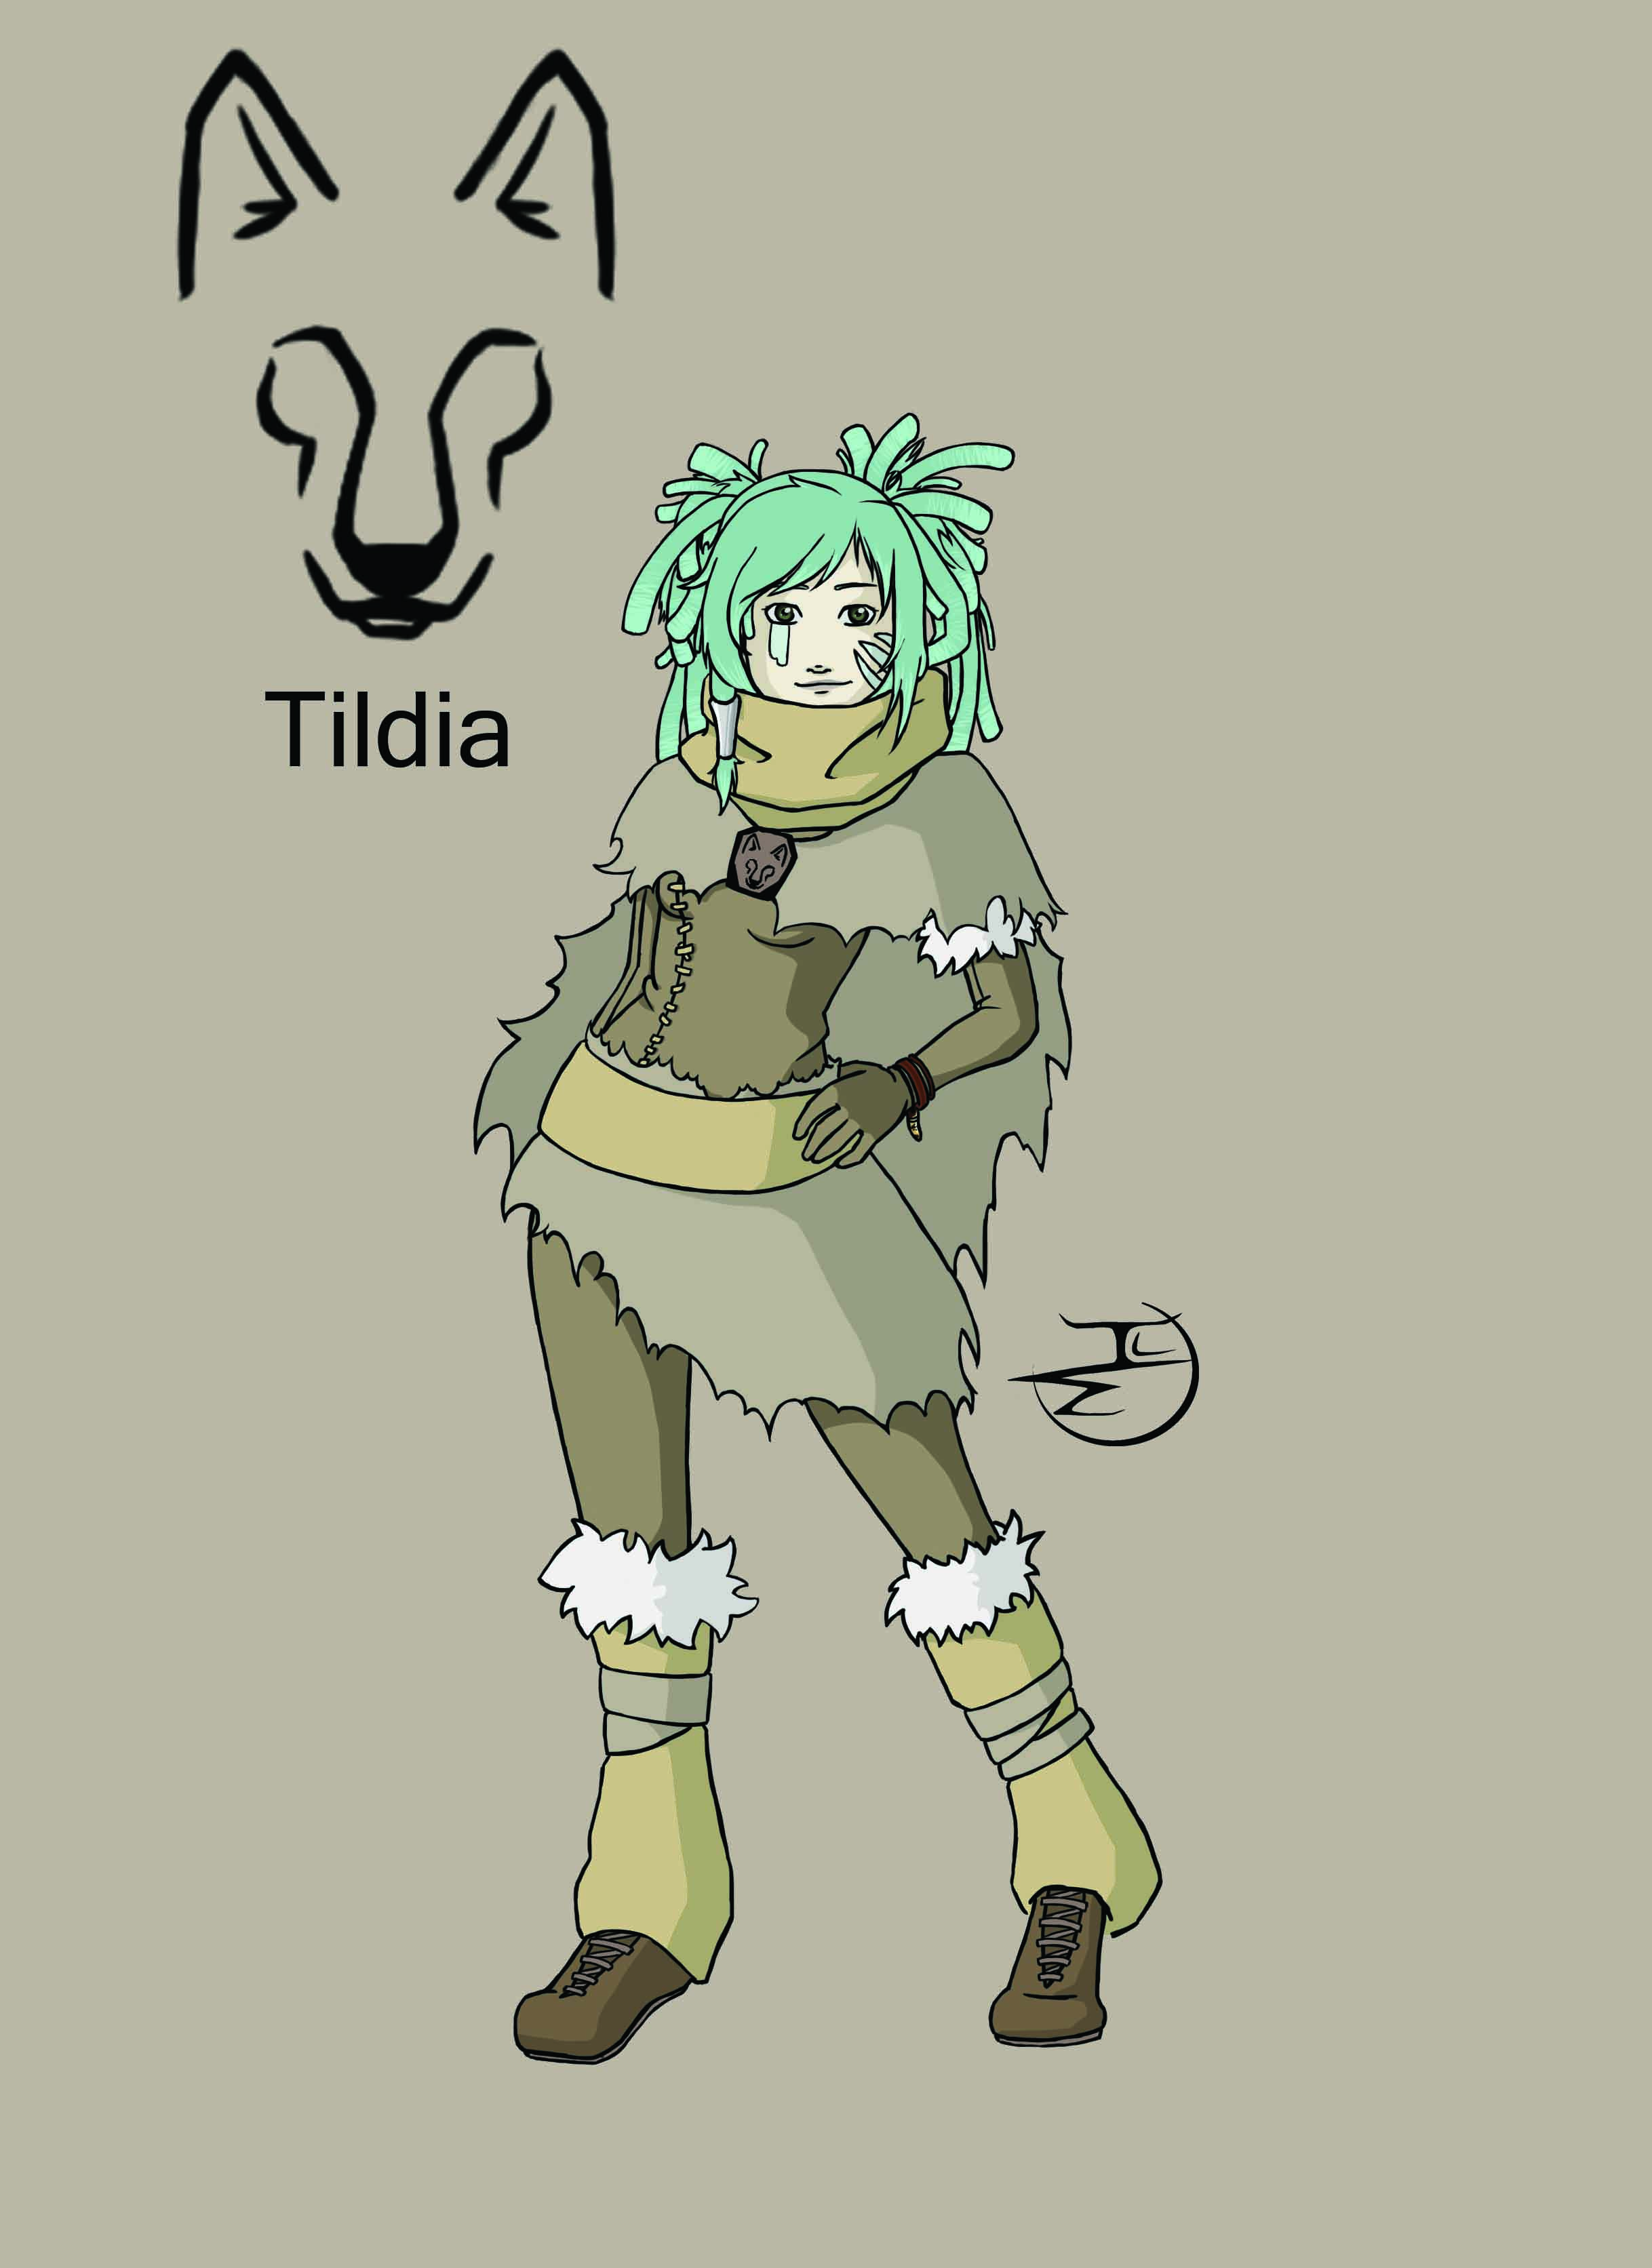 Tildia